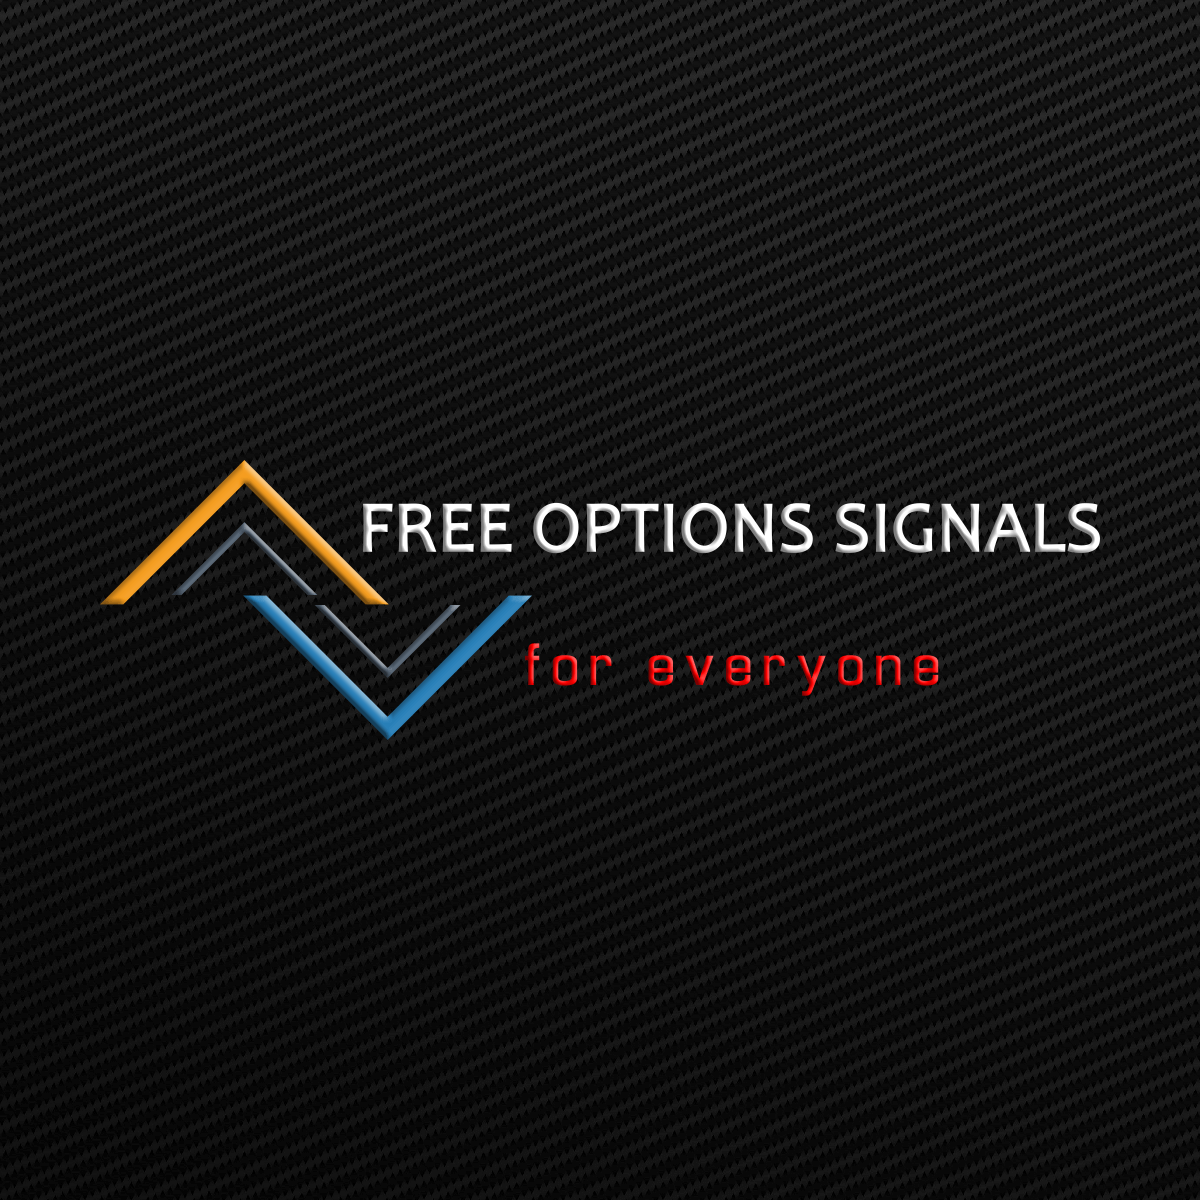 Free binary option signal service